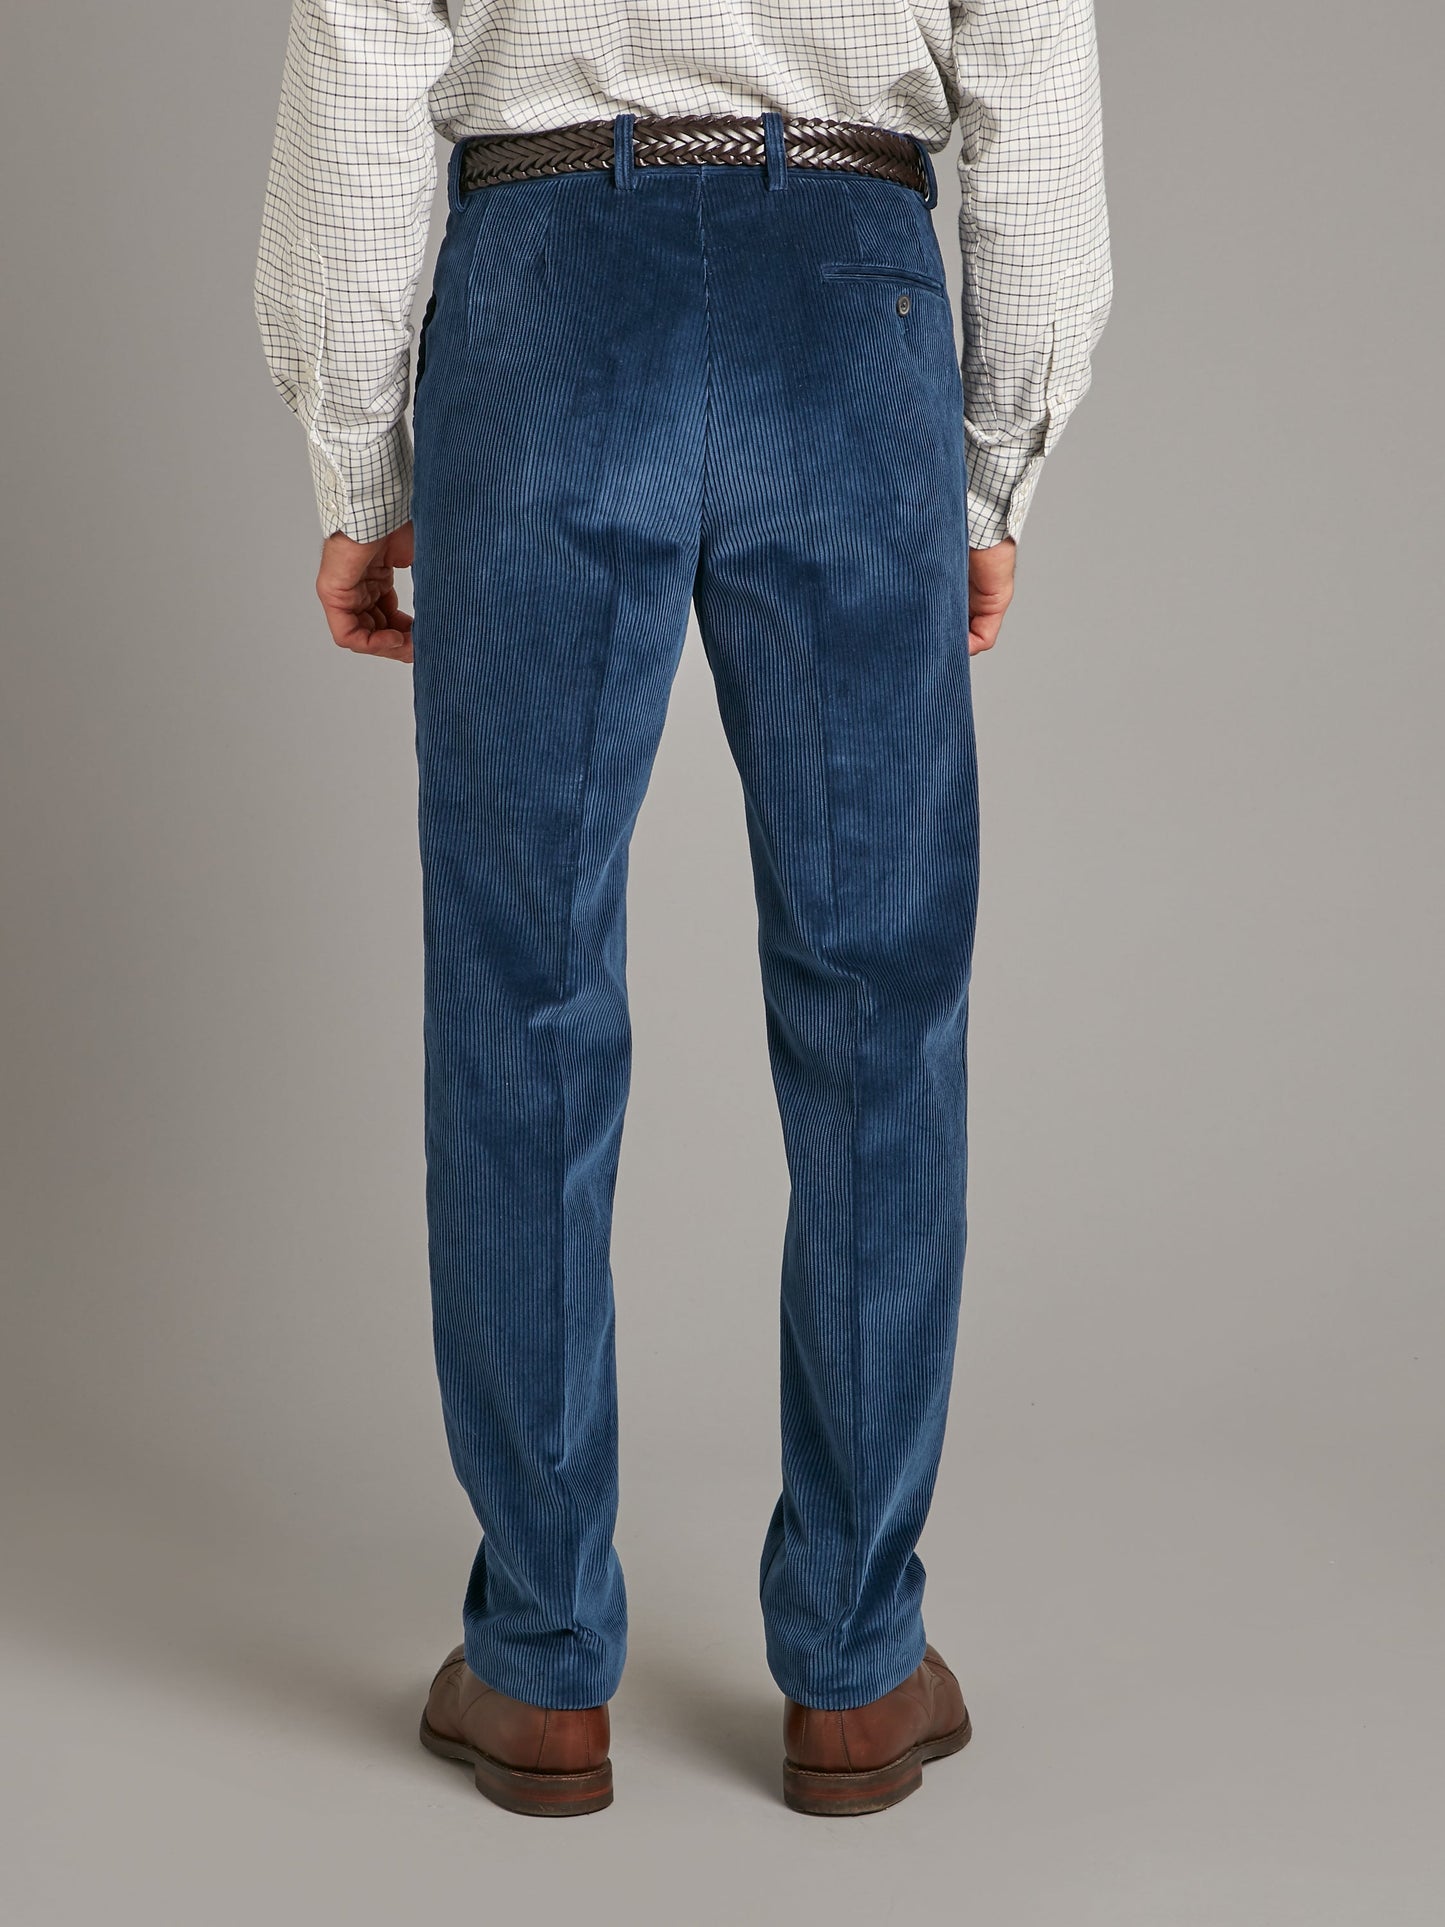 heavyweight corduroy trousers ink blue 2